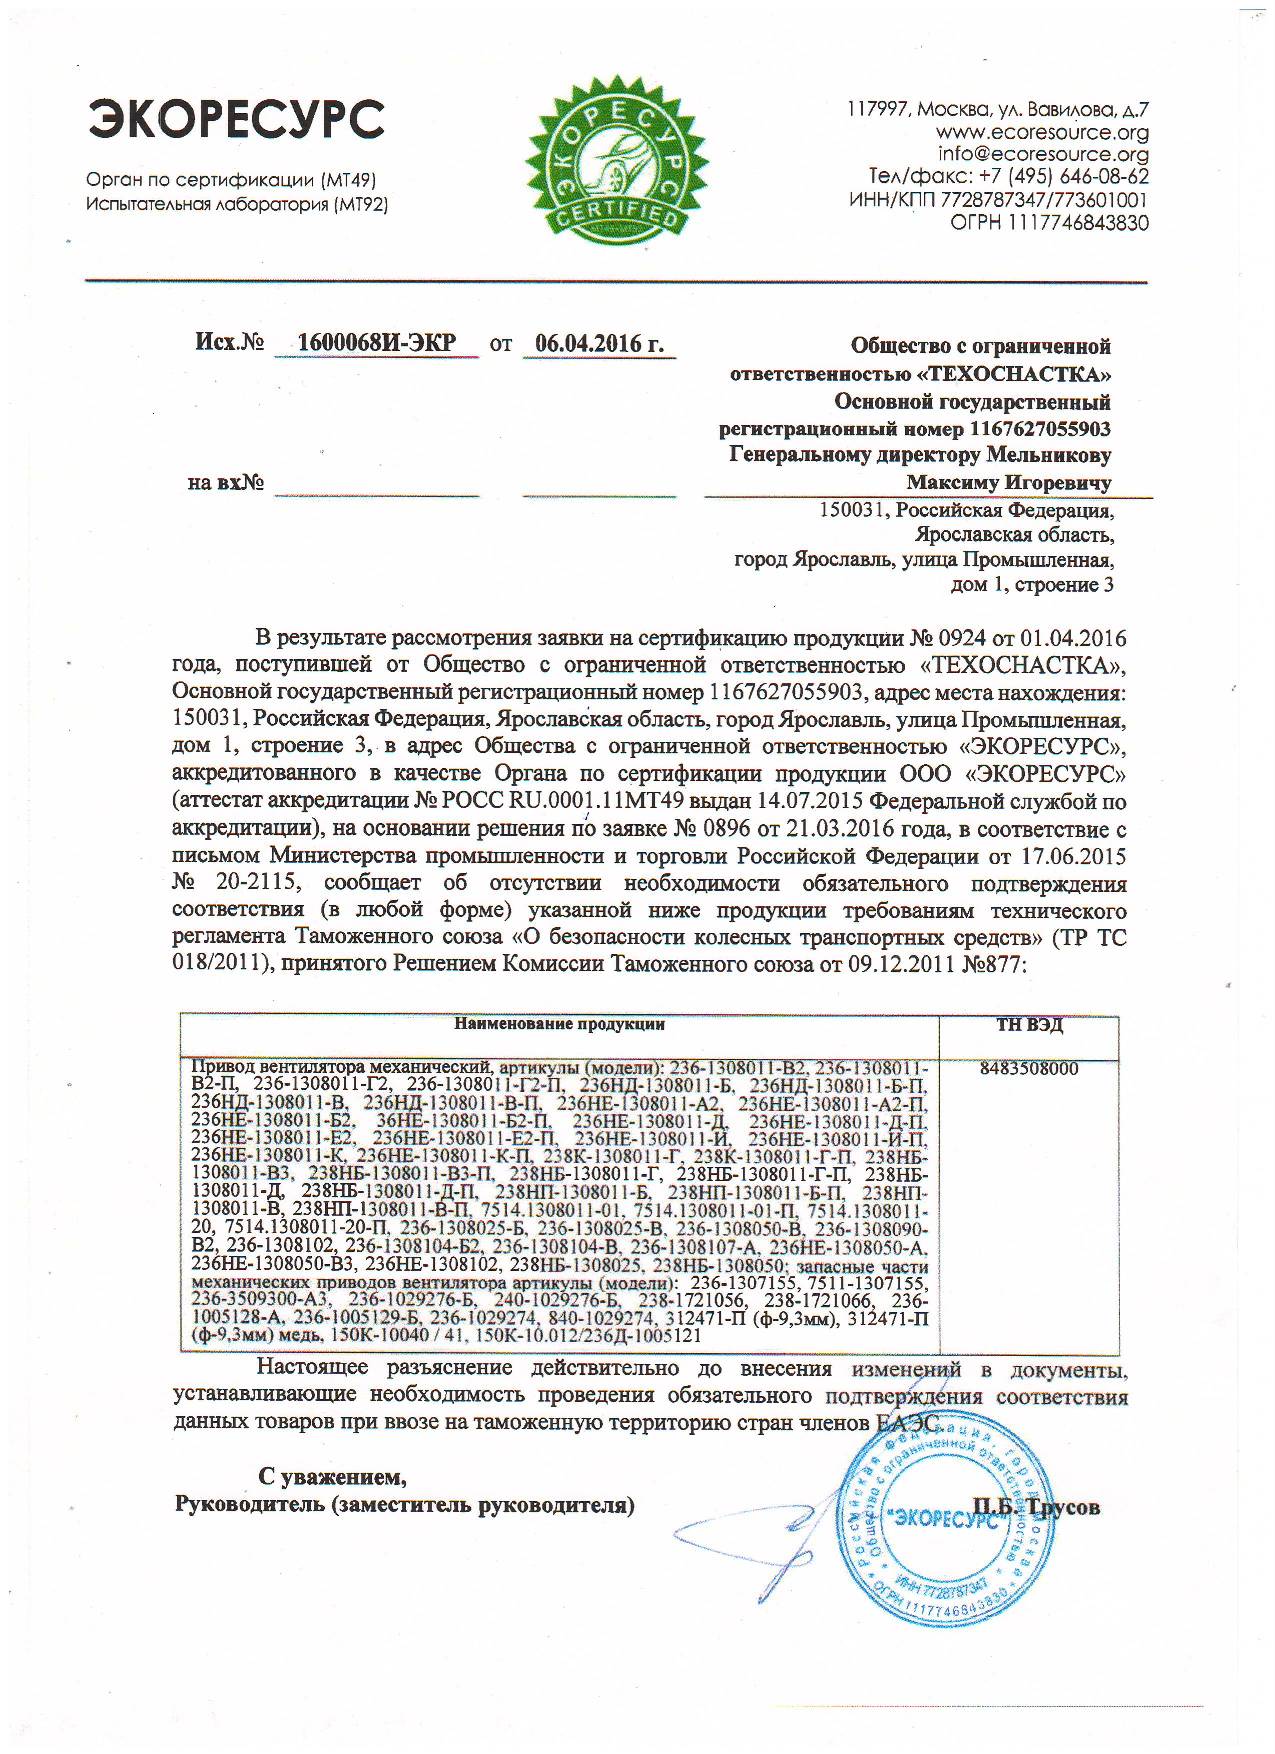 Сертификат соответствия на приводы вентилятора ЯЗТО-АВТО 2016